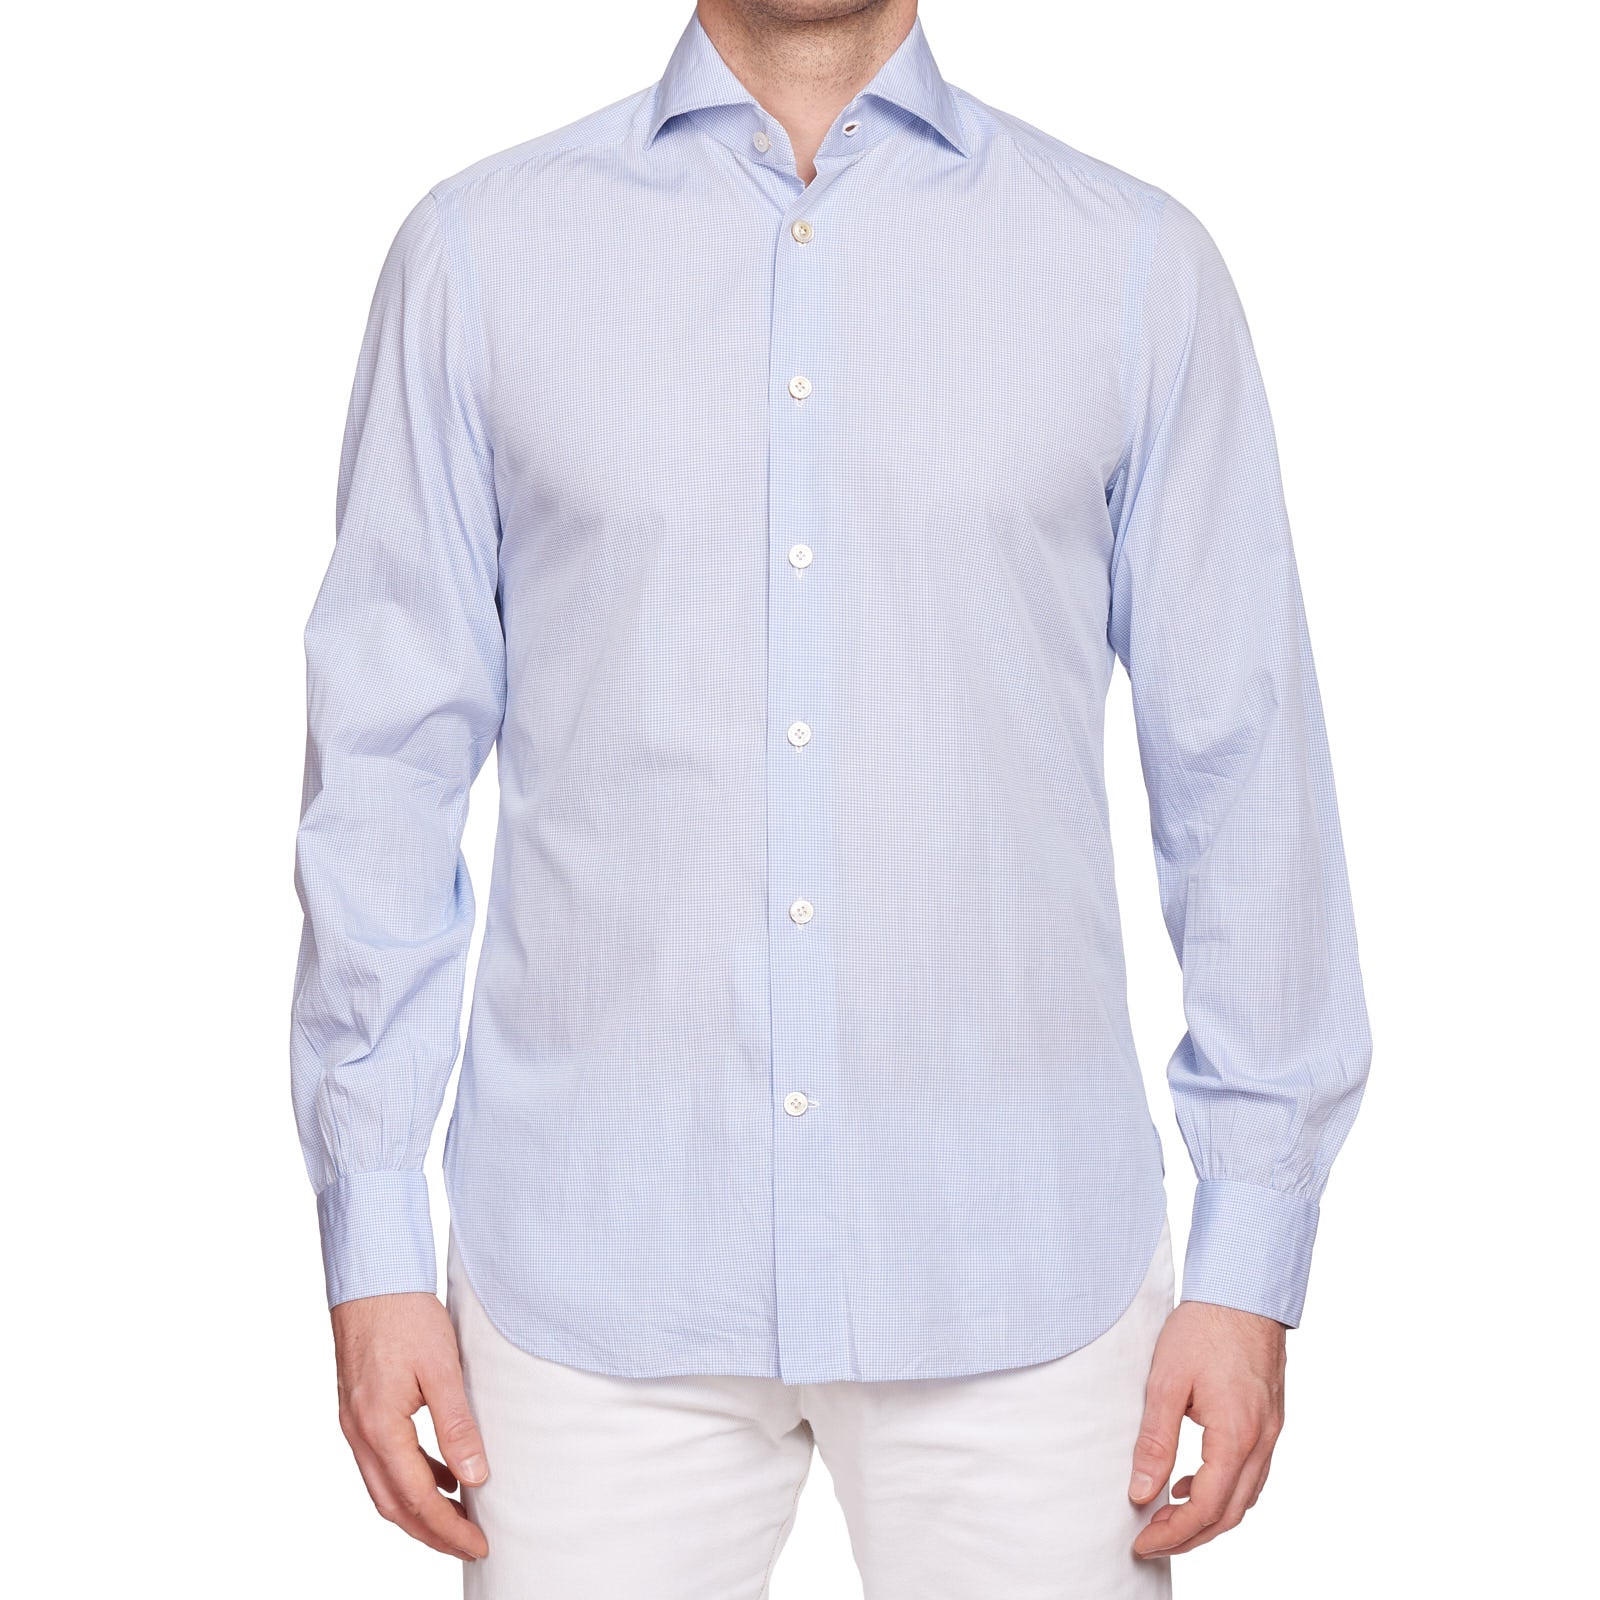 KITON Napoli Handmade Blue Checkered Poplin Cotton Dress Shirt EU 39 US 15.5 NEW